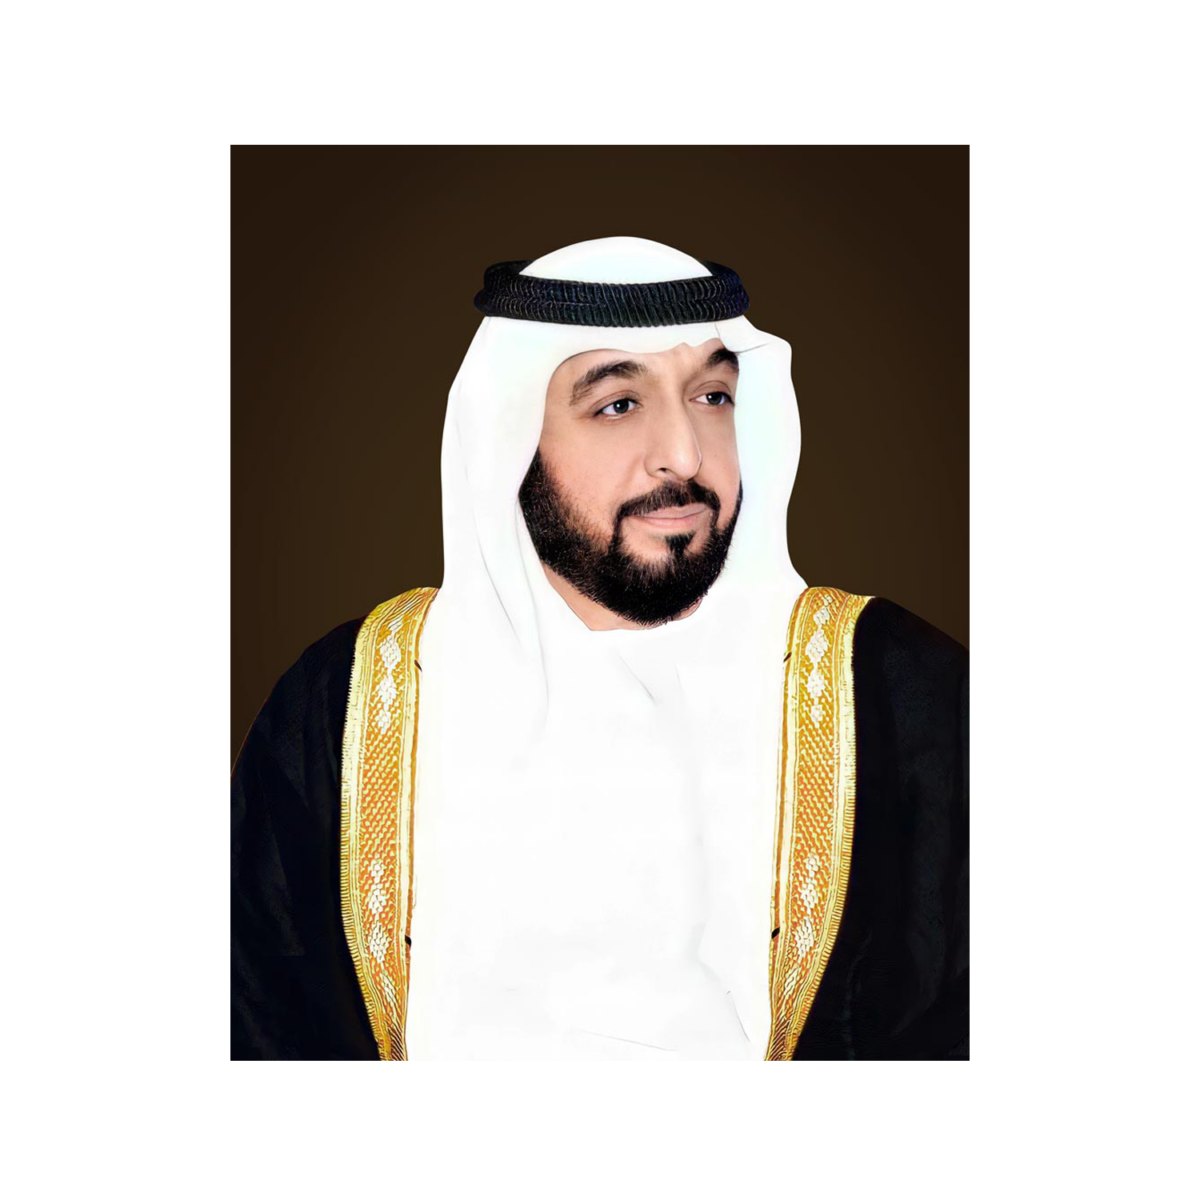 His Highness Sheikh Khalifa Bin Zayed Al Nahyan